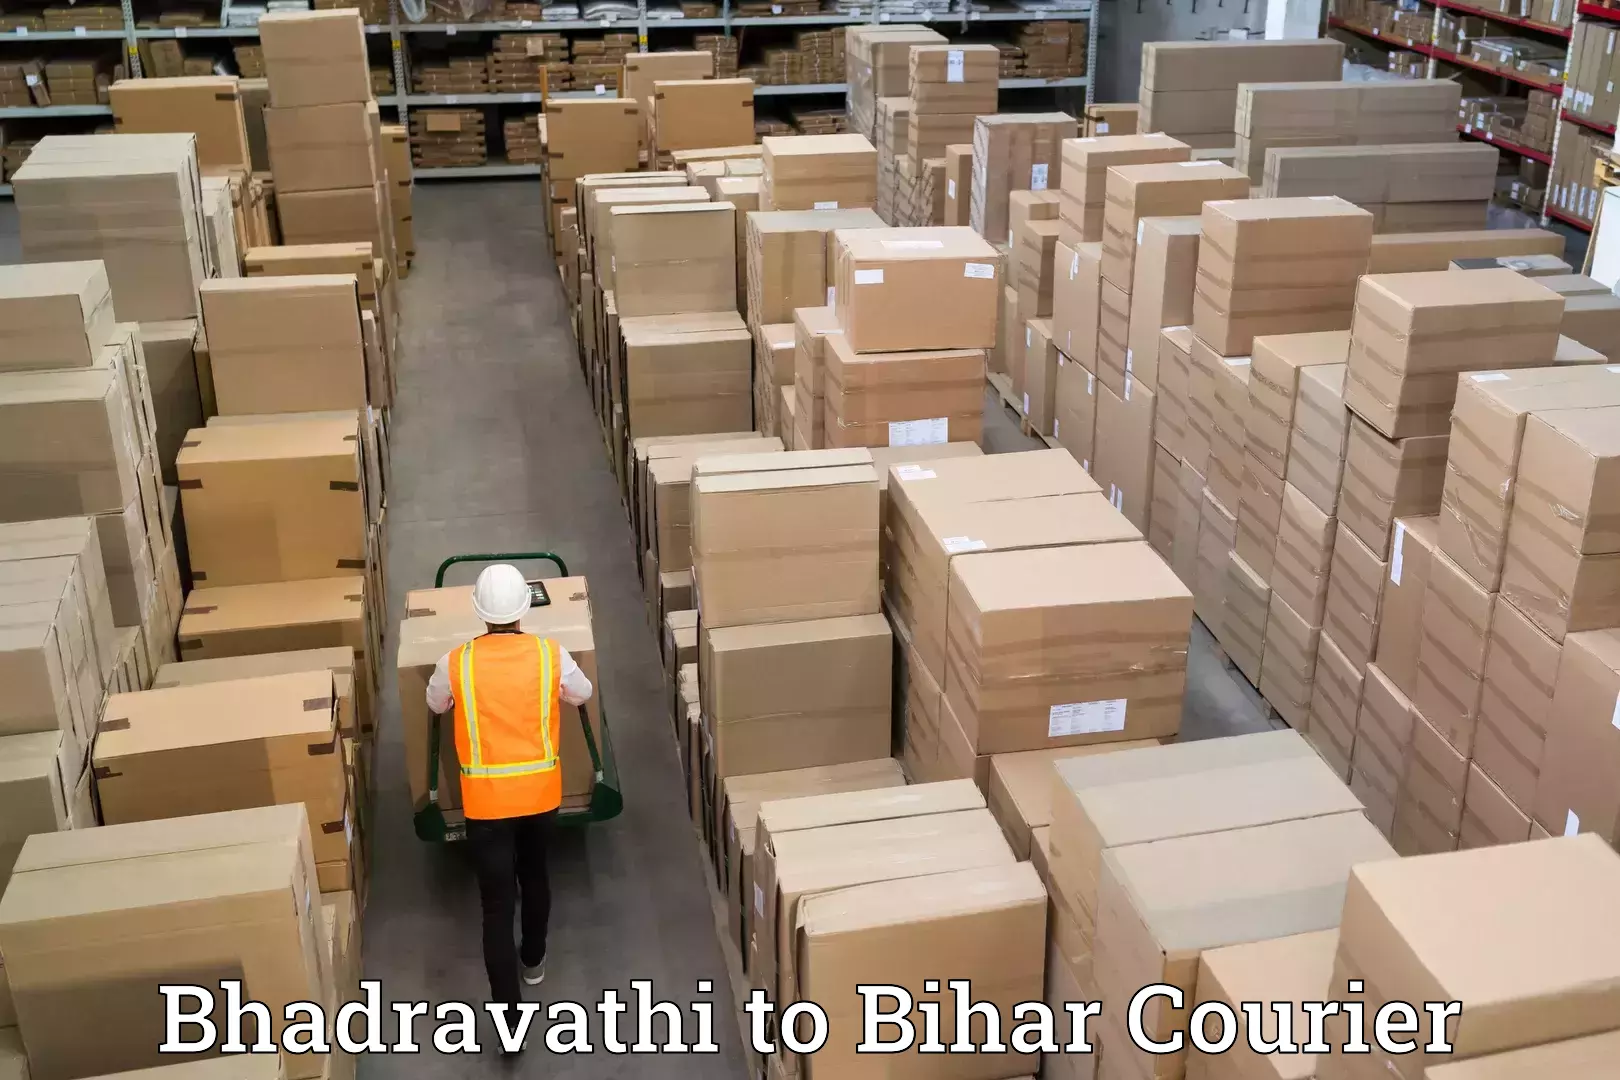 Trusted moving company Bhadravathi to Bihar